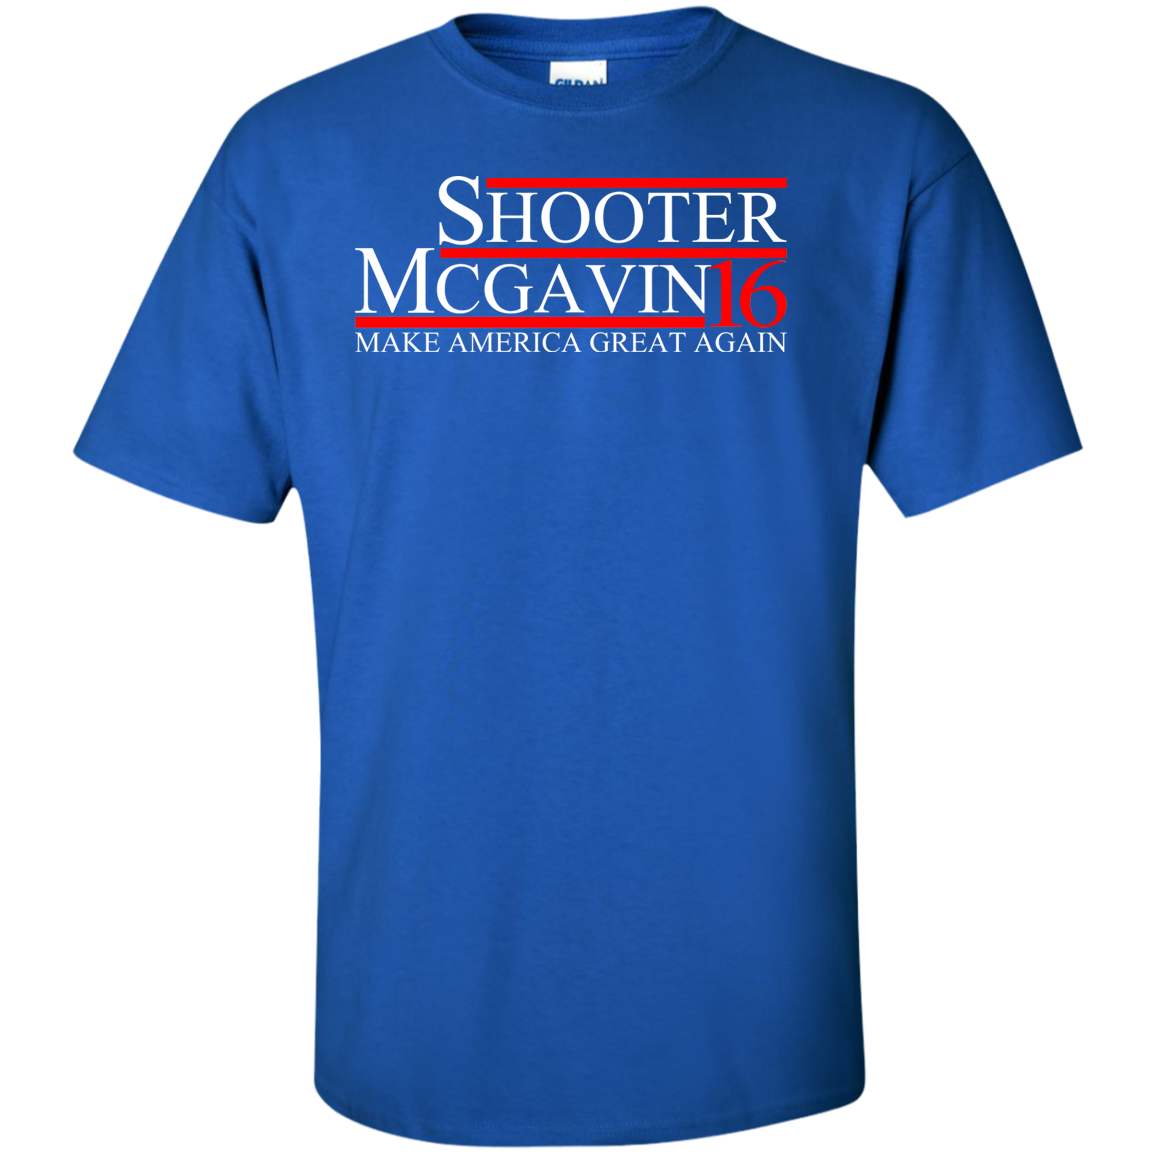 Shooter McGavin 2016 T-shirt, Hoodies, Tanks - ifrogtees